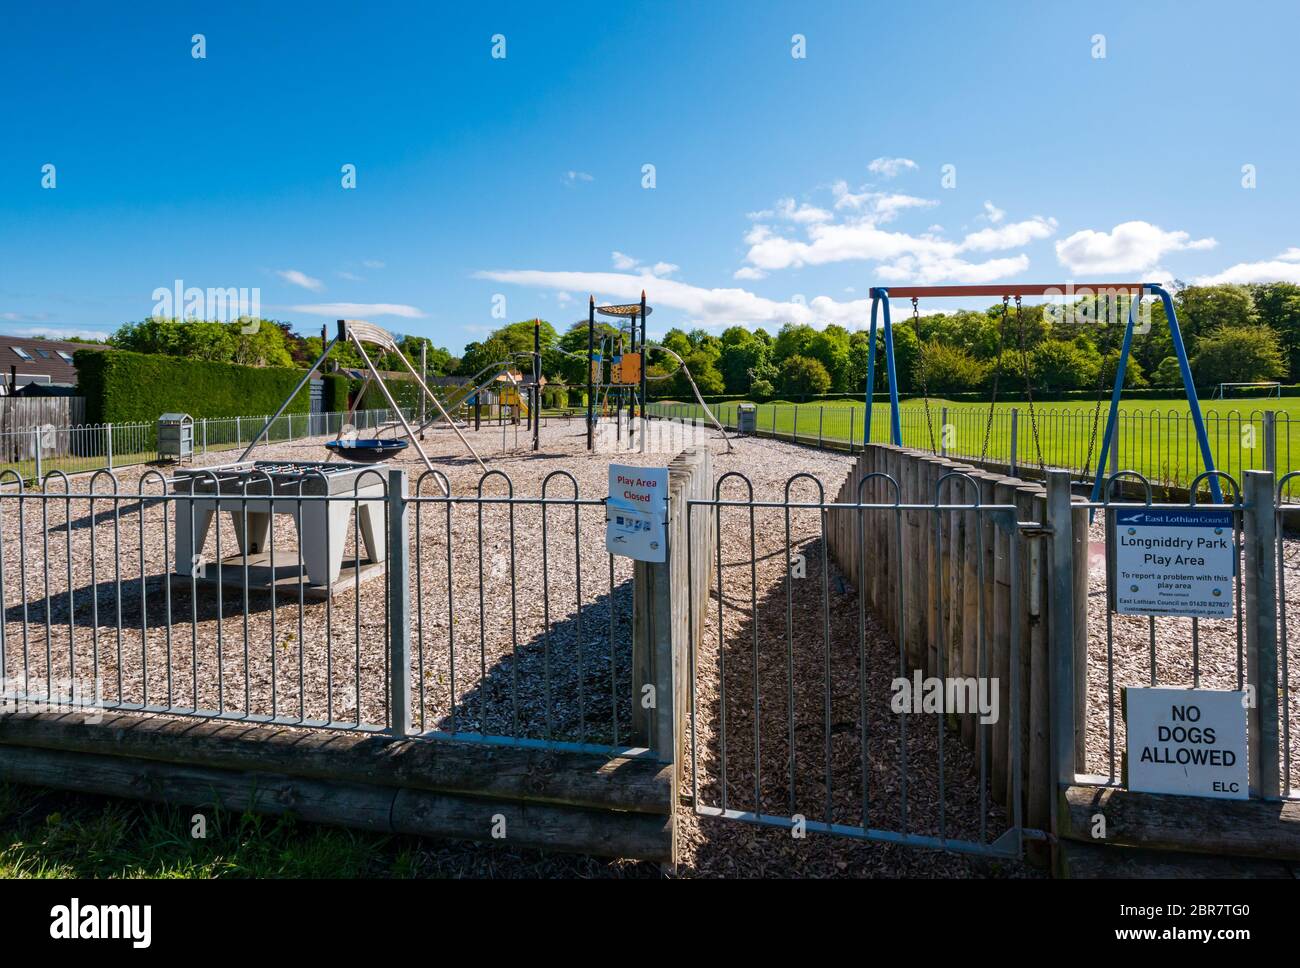 Children's playground closed due to Covid-19 Coronavirus pandemic lockdown on sunny day, Longniddry, East Lothian, Scotland, UK Stock Photo